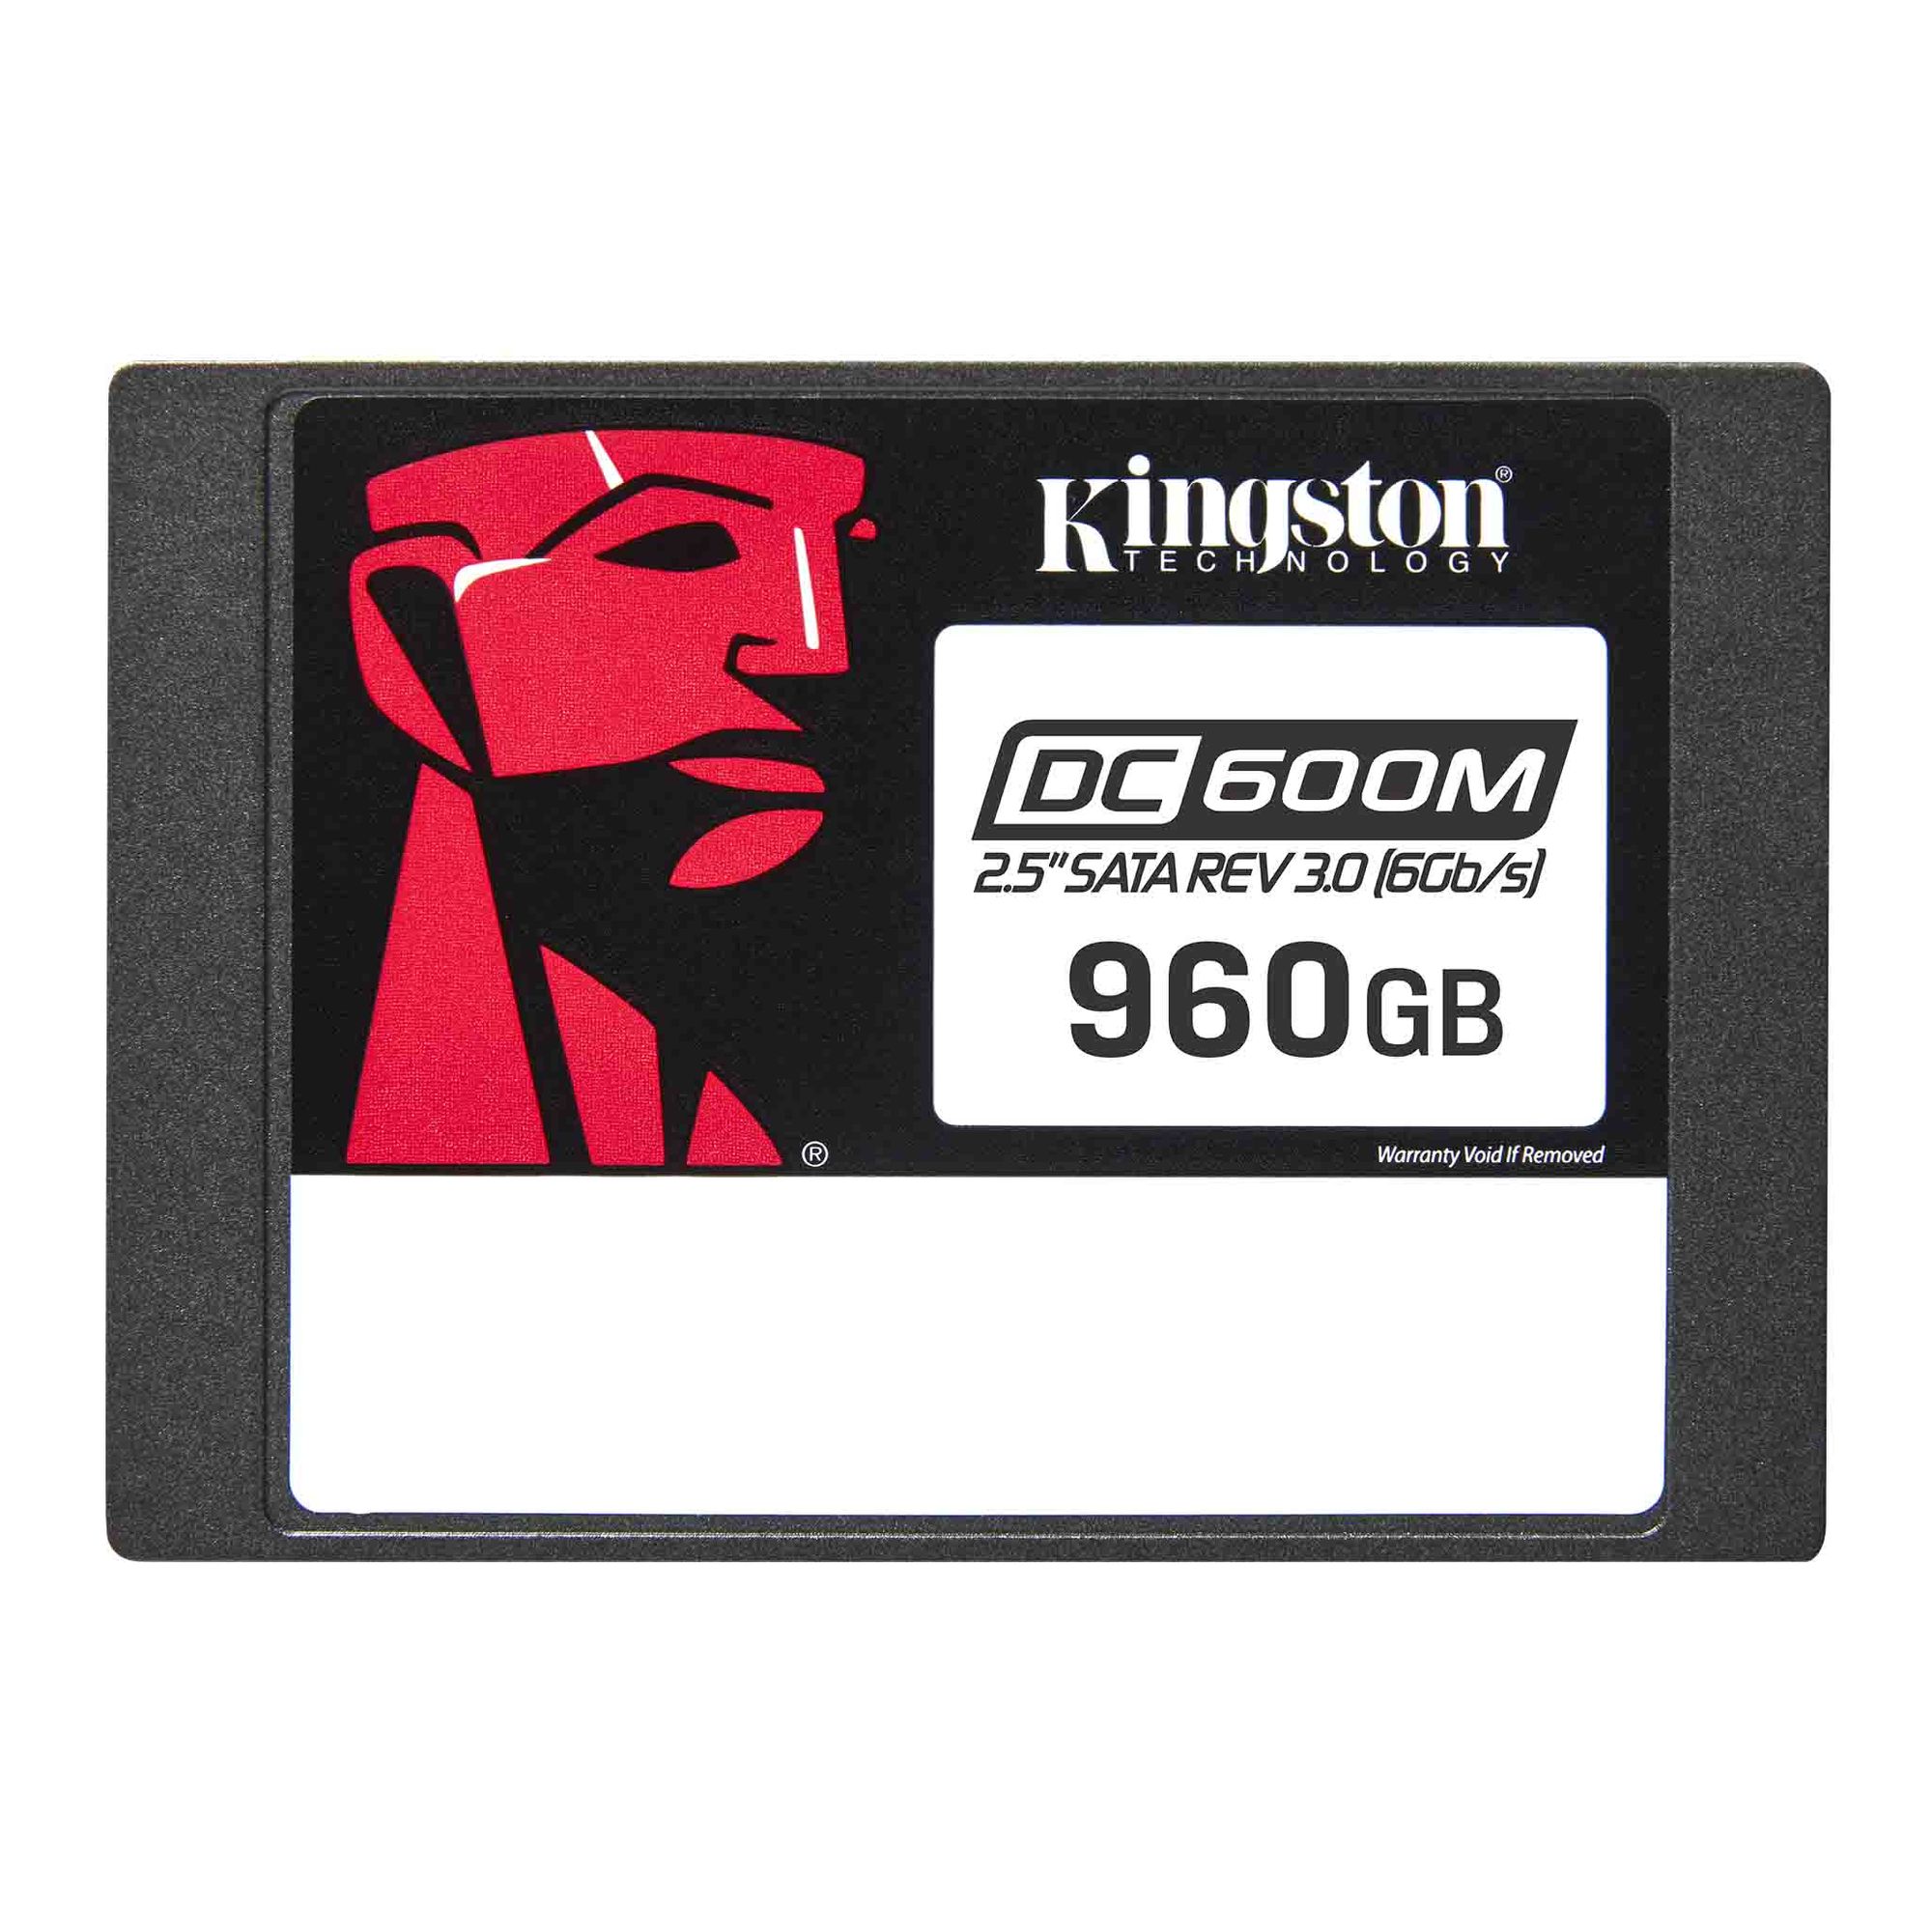 Накопитель SSD 2.5 Kingston Enterprise DC600M SATA 3 960GB (SEDC600M/960G) накопитель ssd kingston 3840gb 2 5 sata 3 sedc600m 3840g